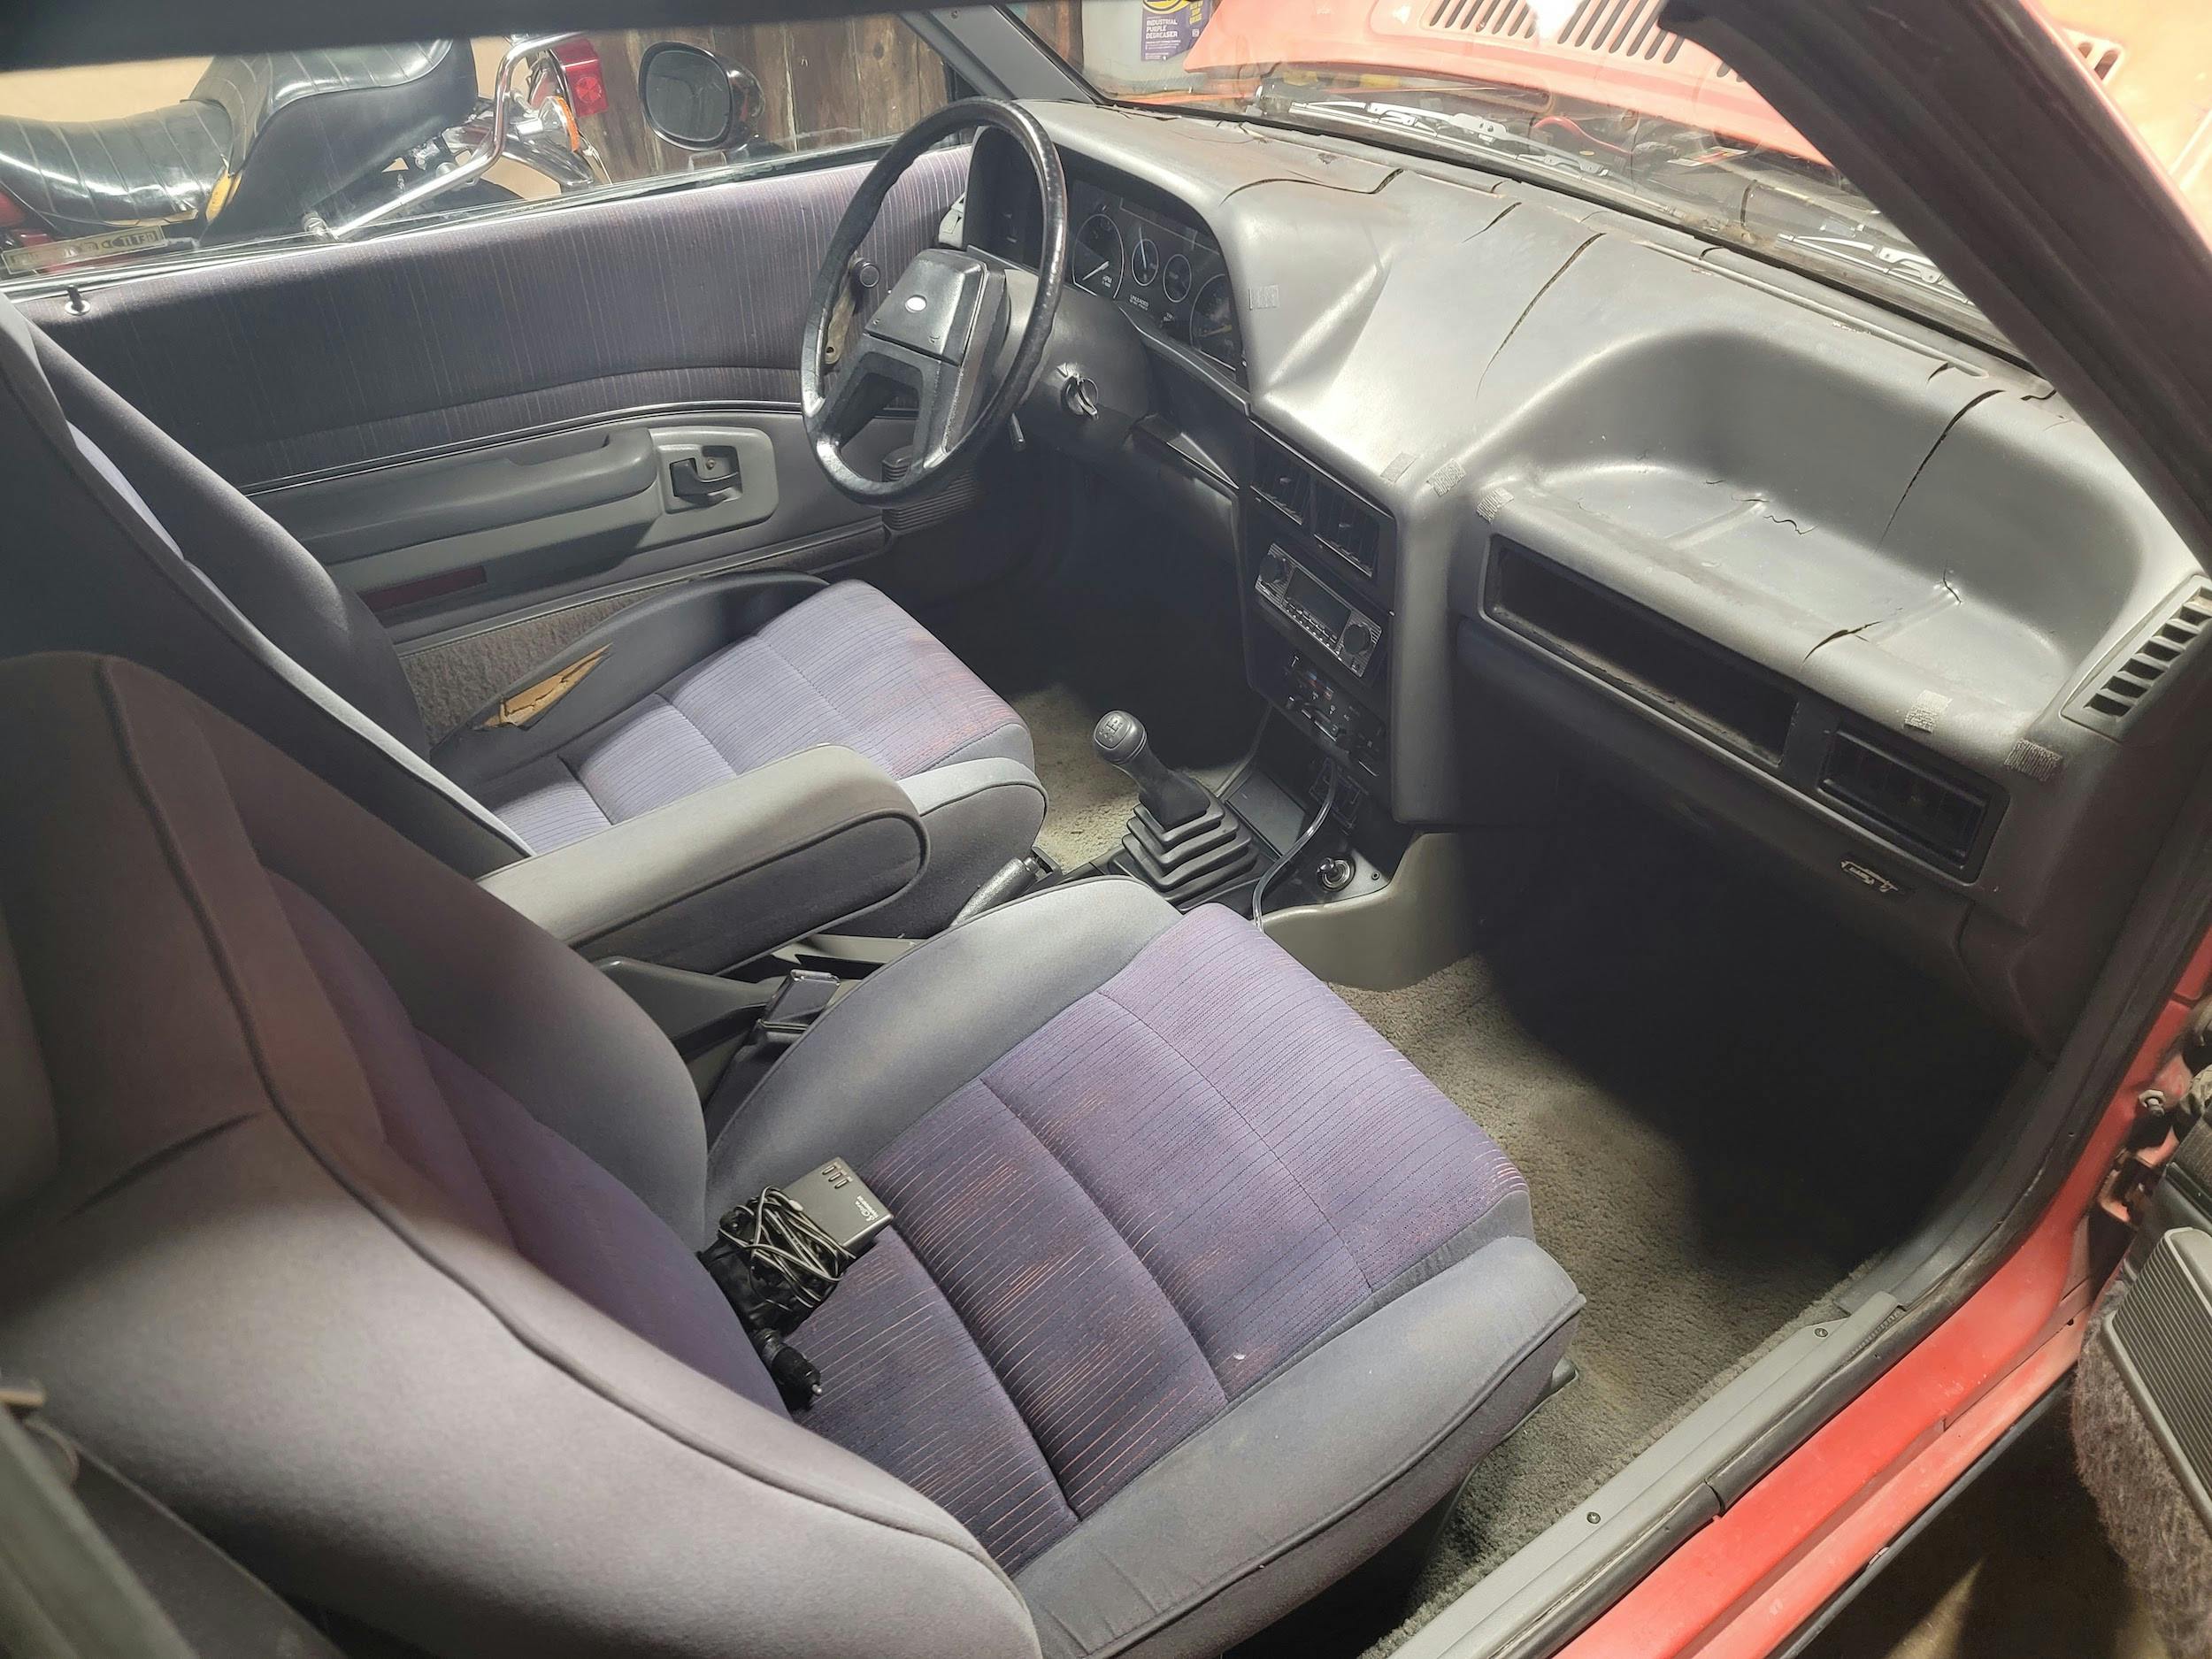 1985 Escort GT Turbo interior